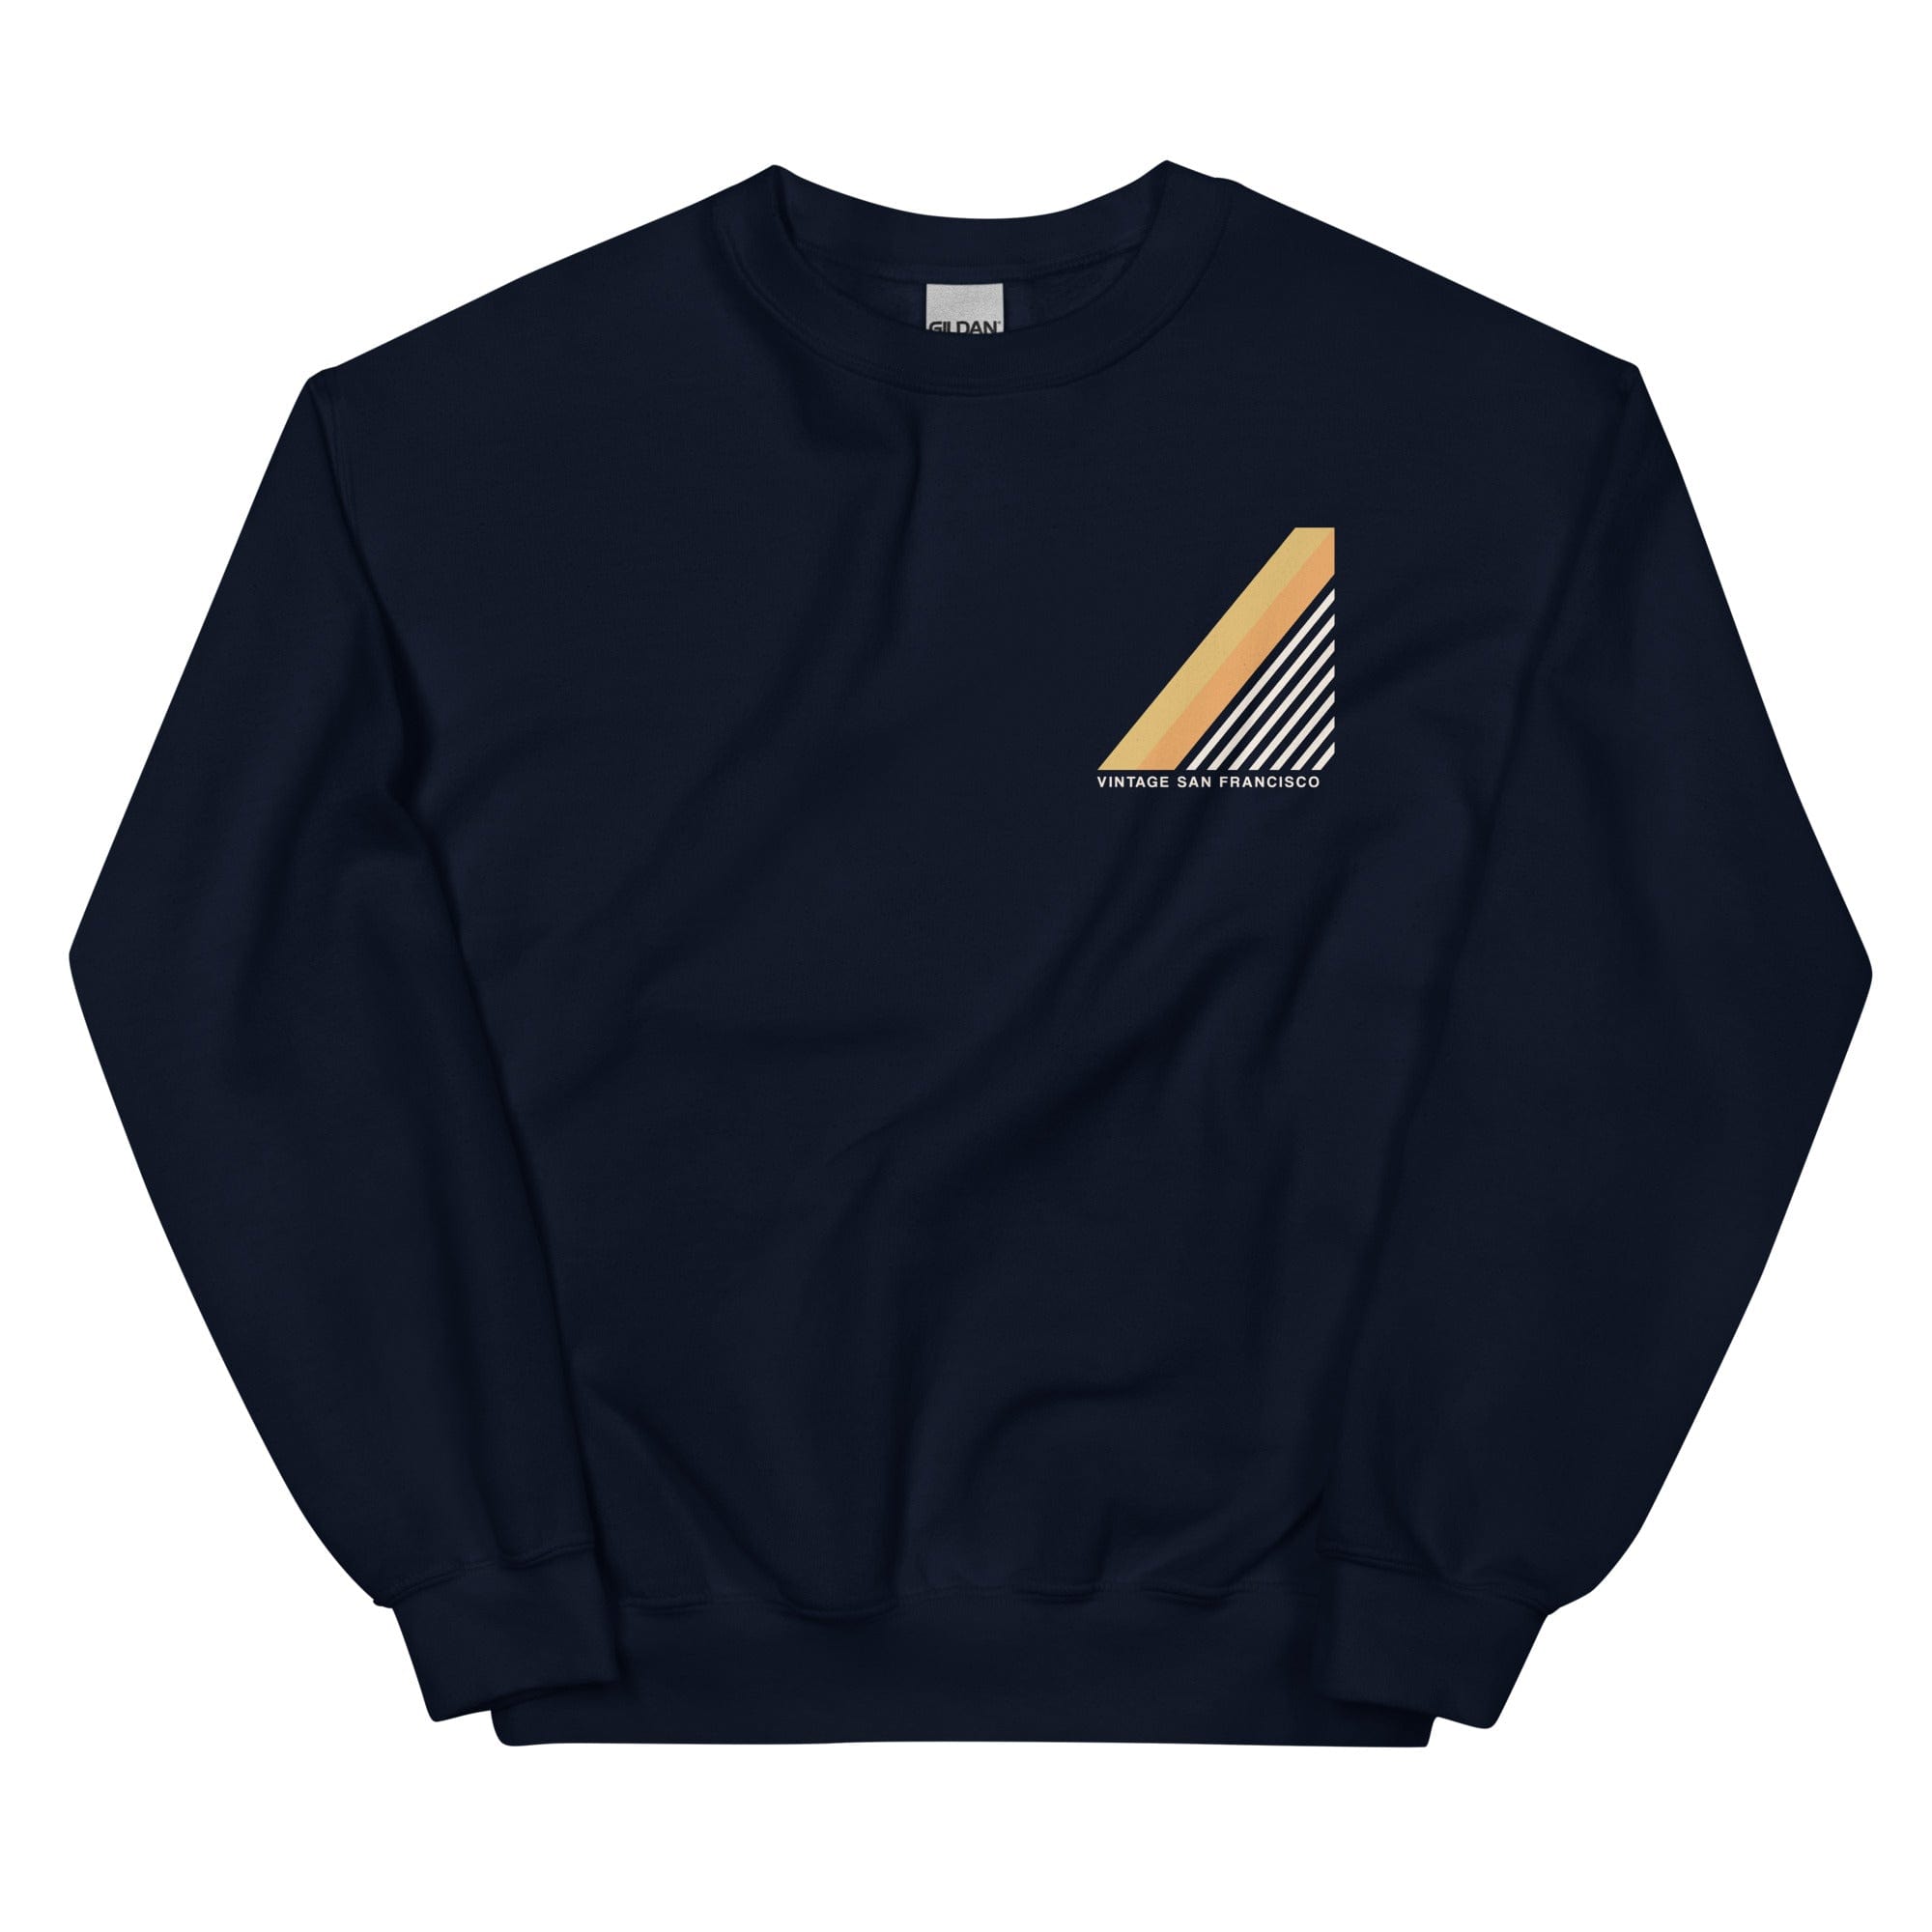 City Shirt Co Vintage San Francisco Sweatshirt Navy / S